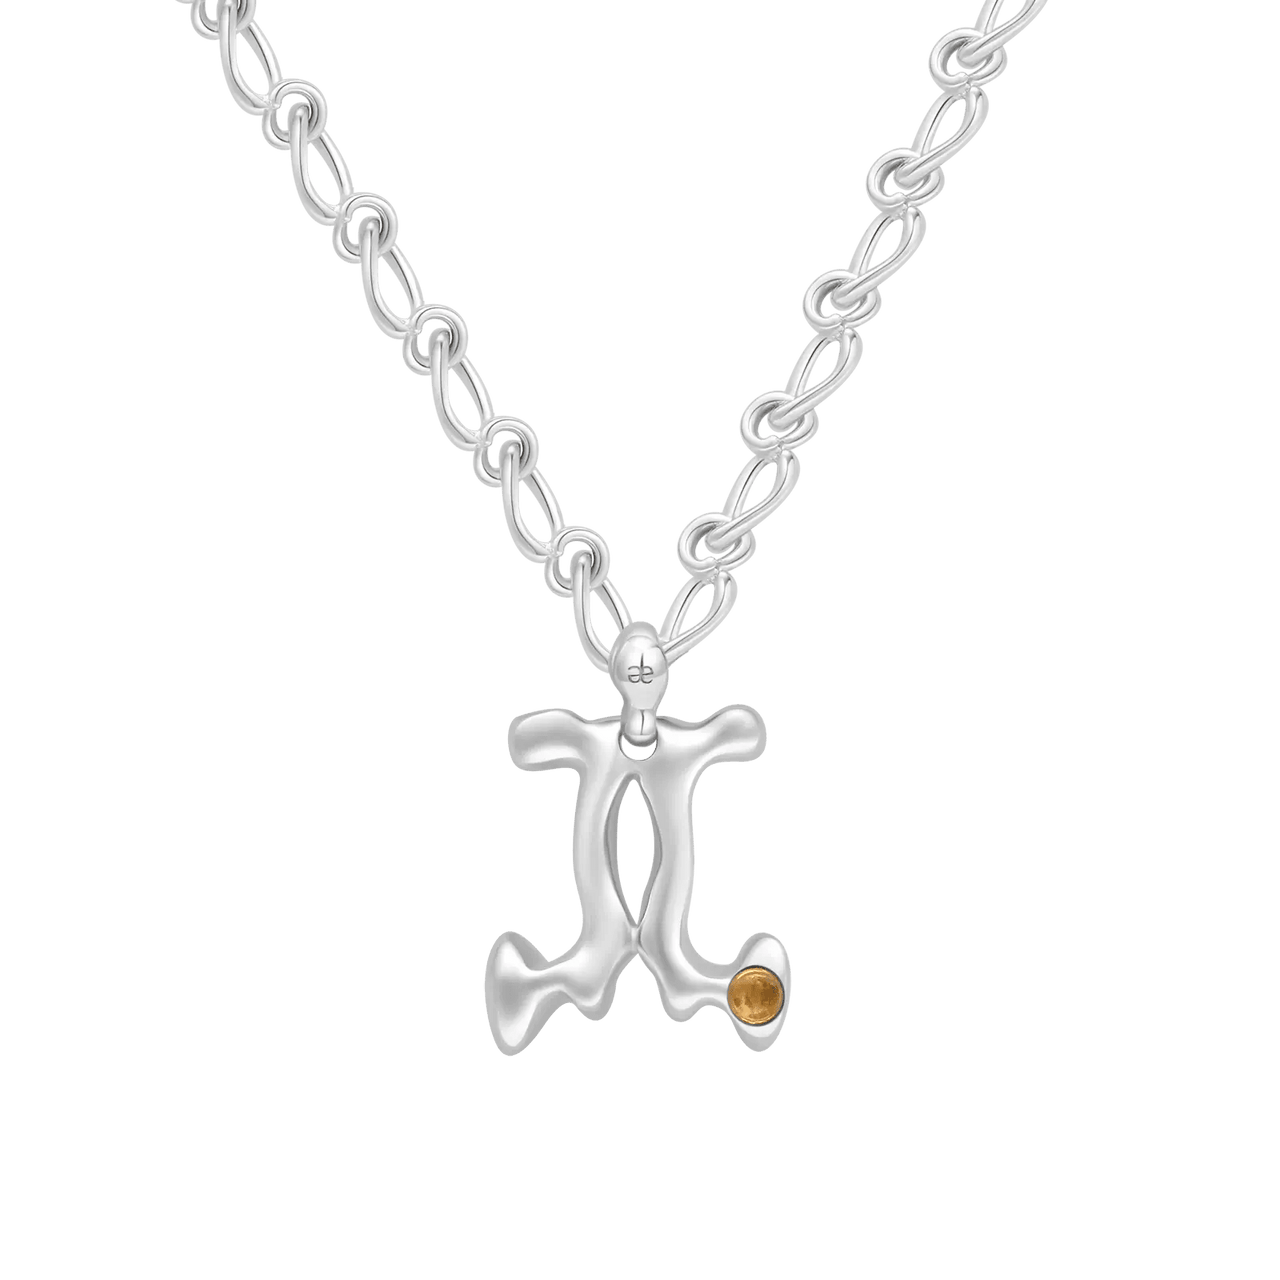 Gemini Gemstone Pendant on Eclipse Necklace